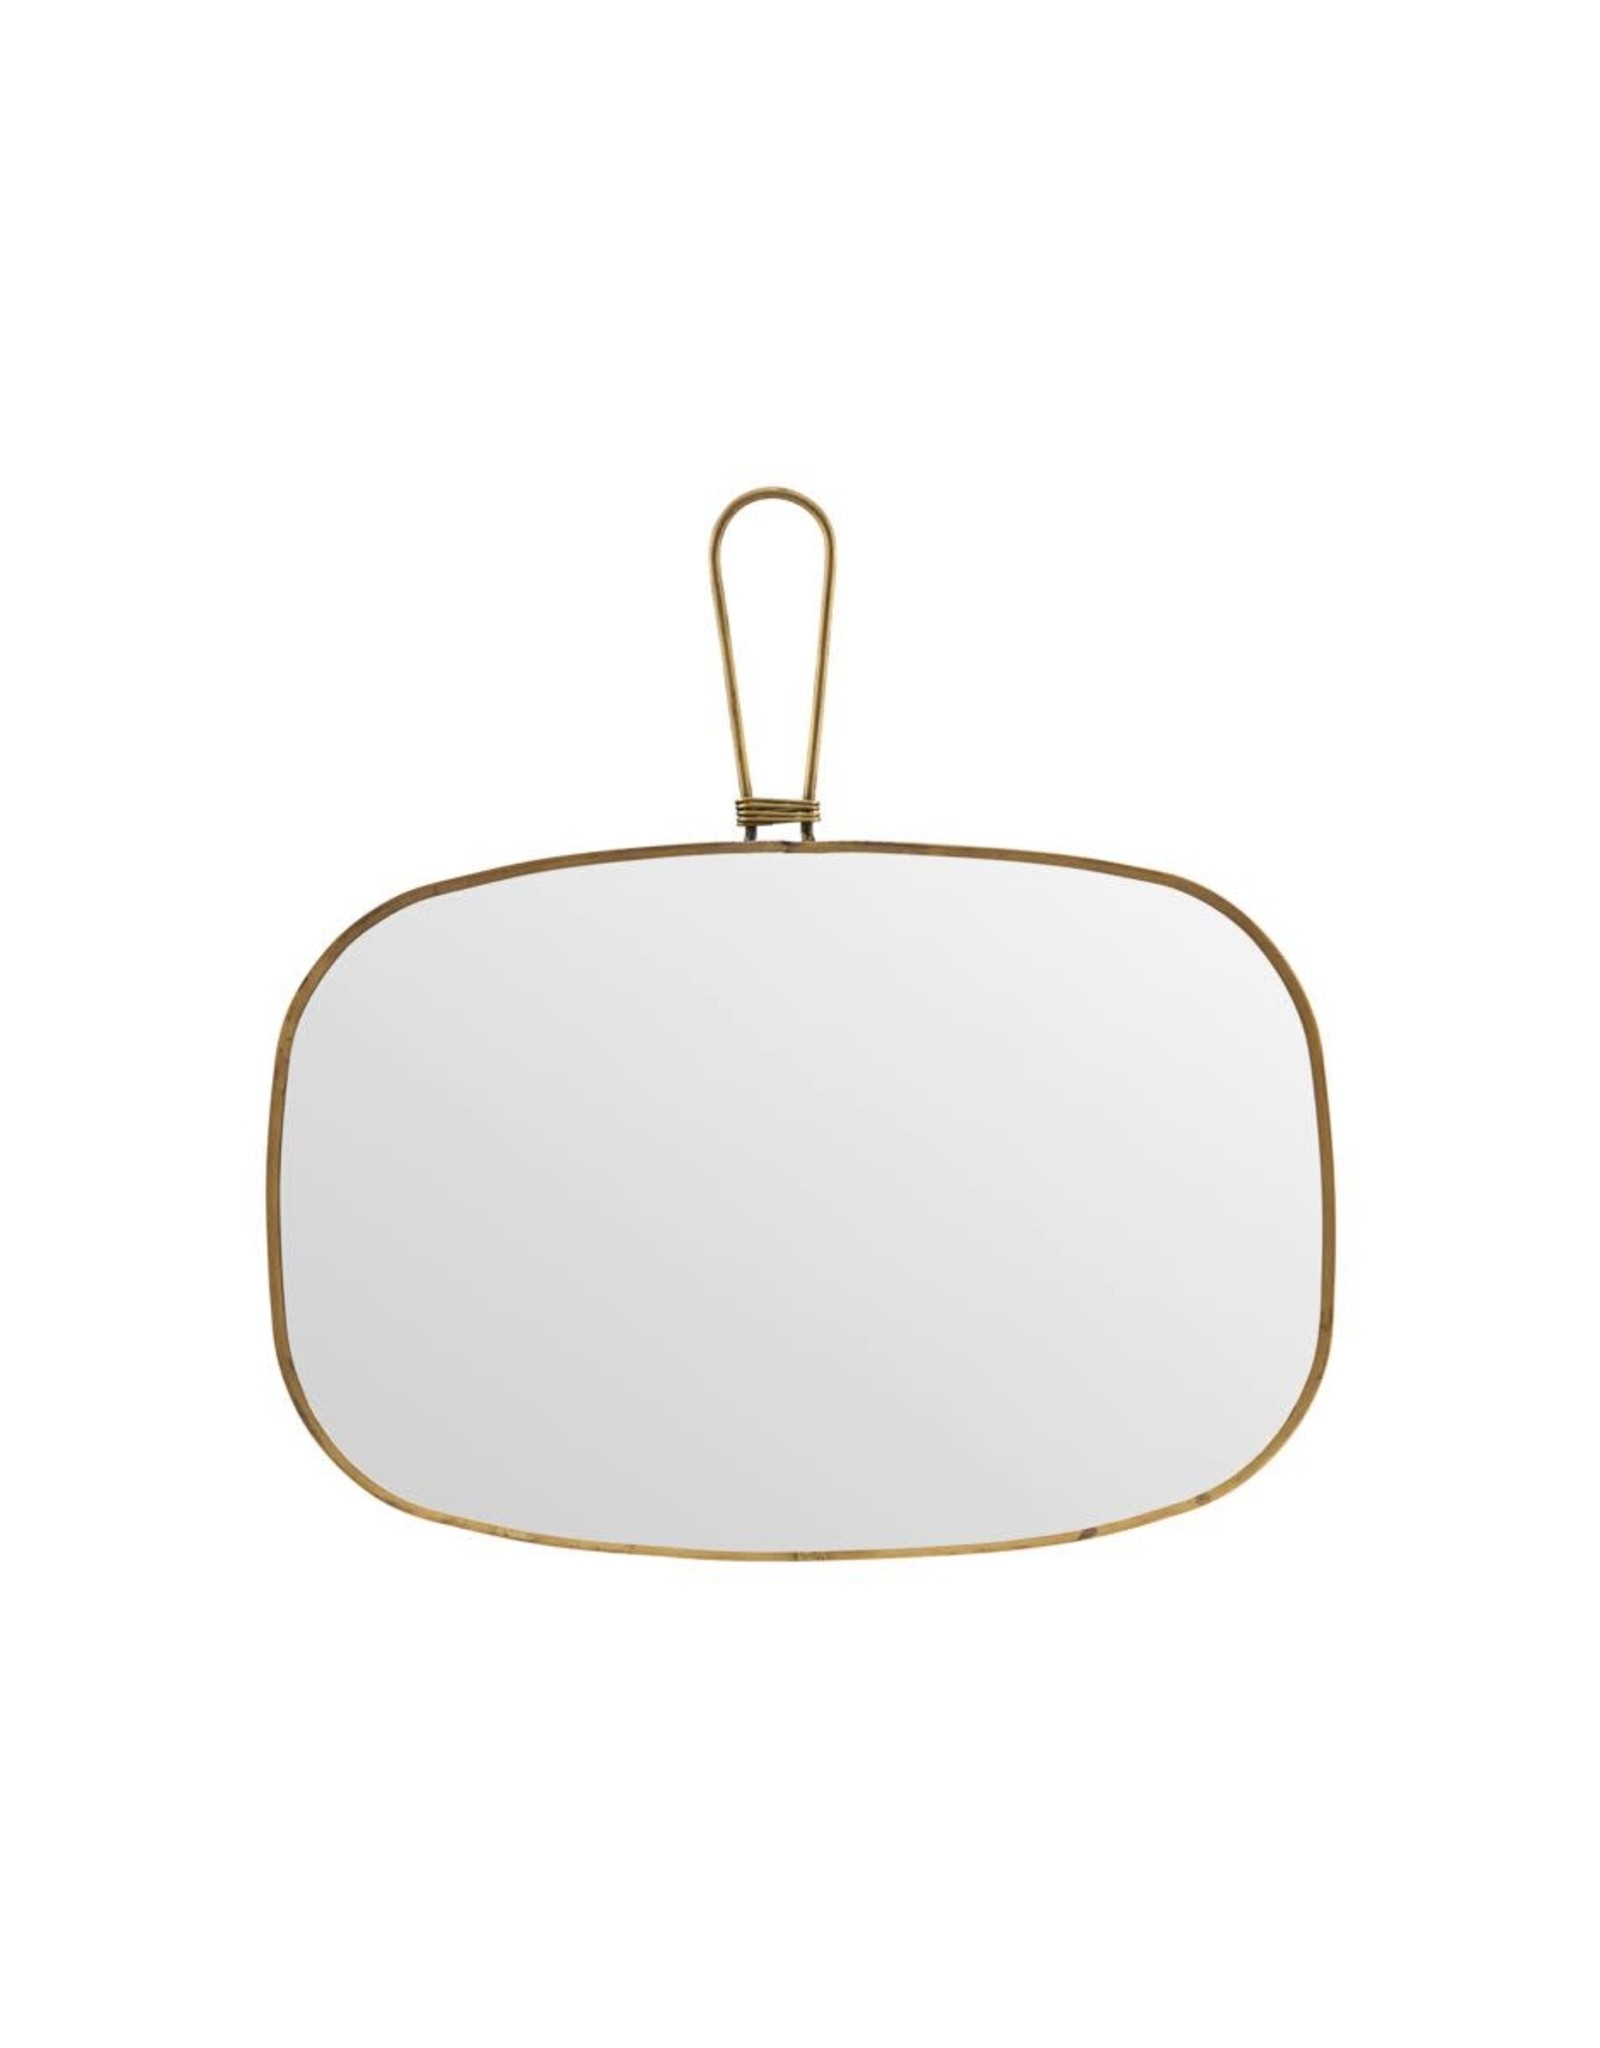 Meraki mirror with frame - brass